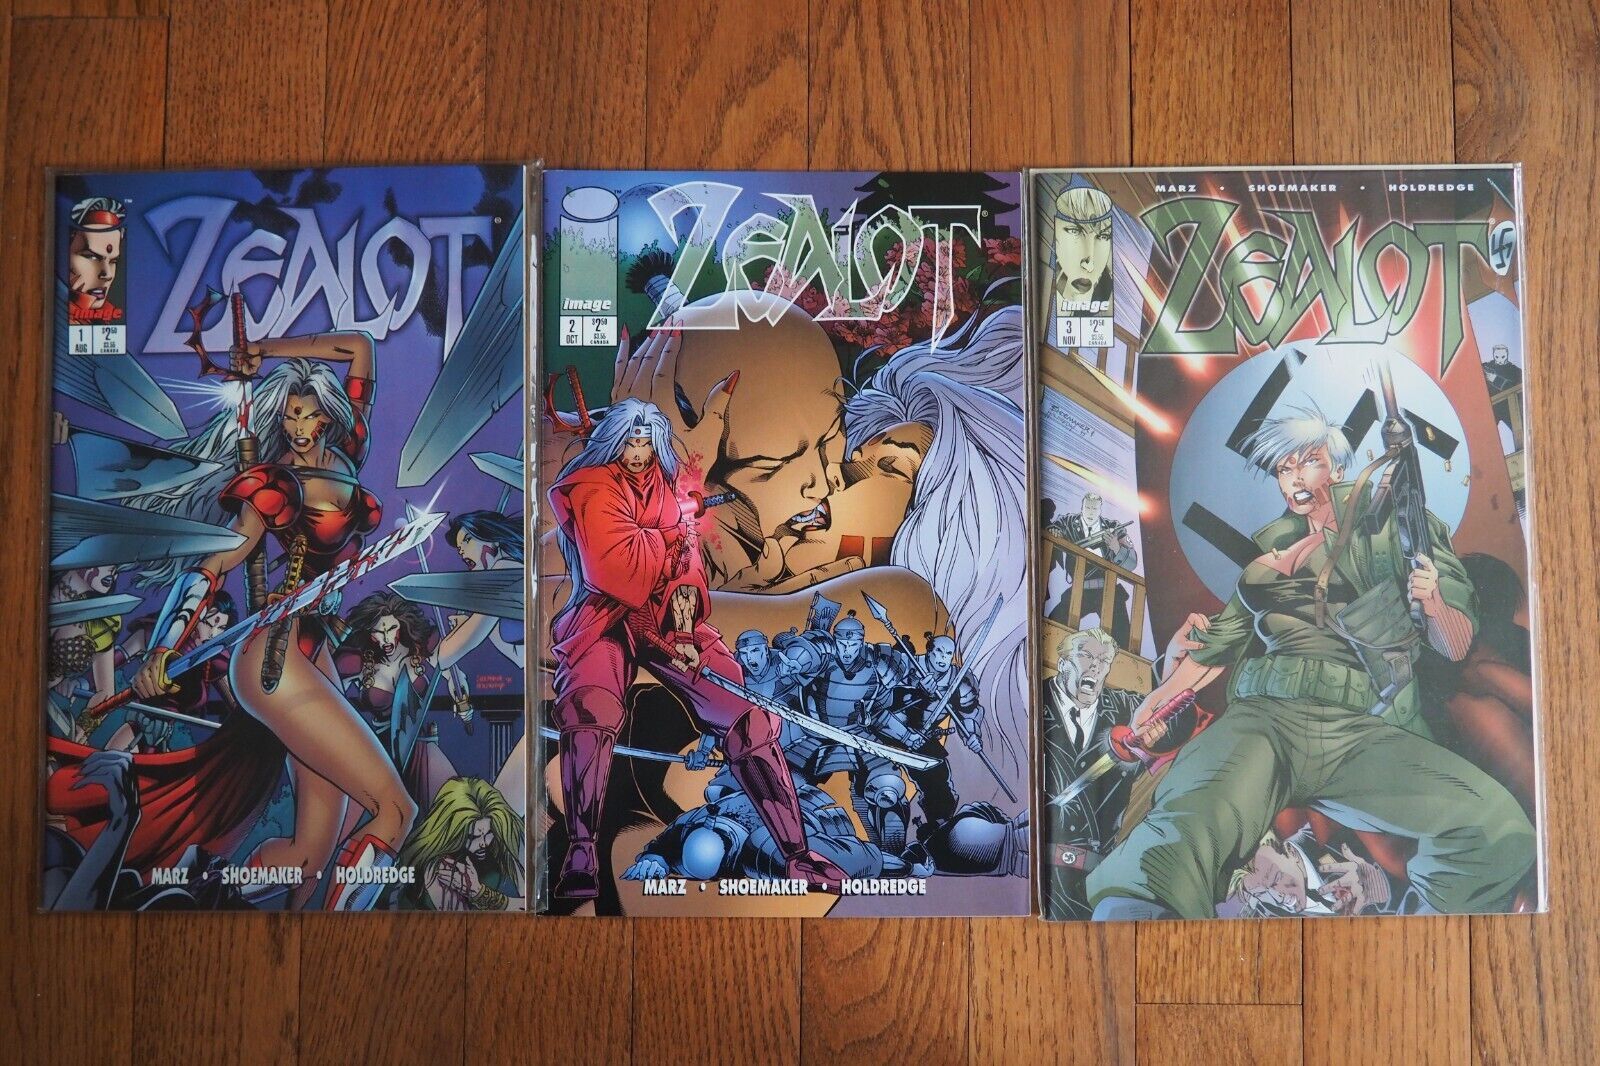 Zealot Issues 1 2 3 Wild Cats WildC.A.T.S C.A.T.S. Image Comics